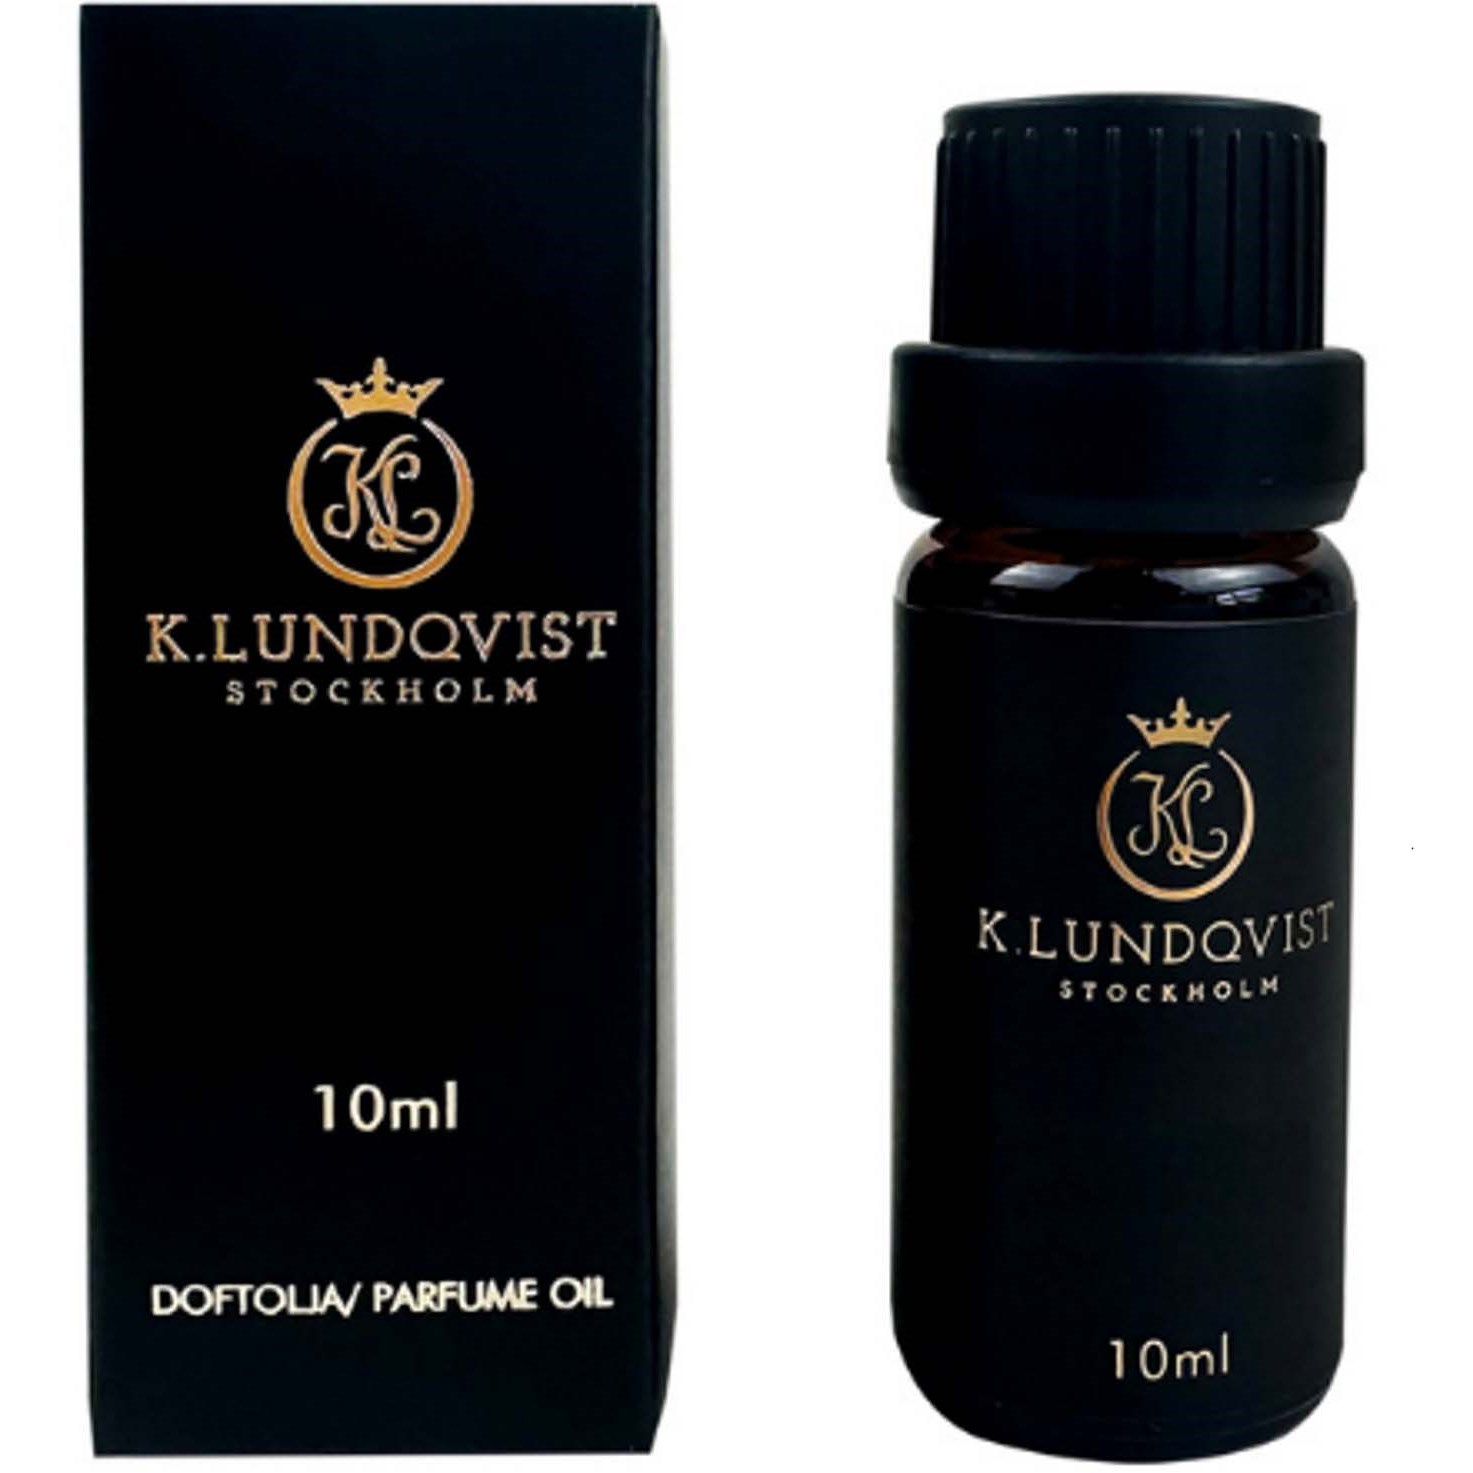 K. Lundqvist Stockholm Perfume Oil Black Cashmere/Patchouli, Tonka bea